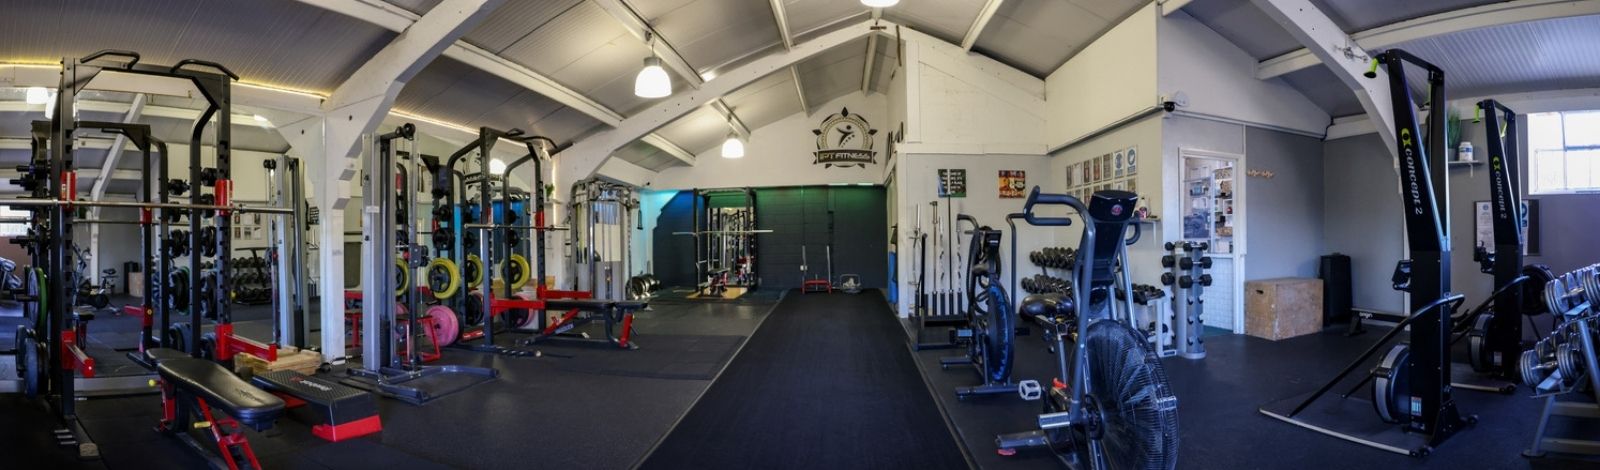 Personal training gym in Tunbridge Wells